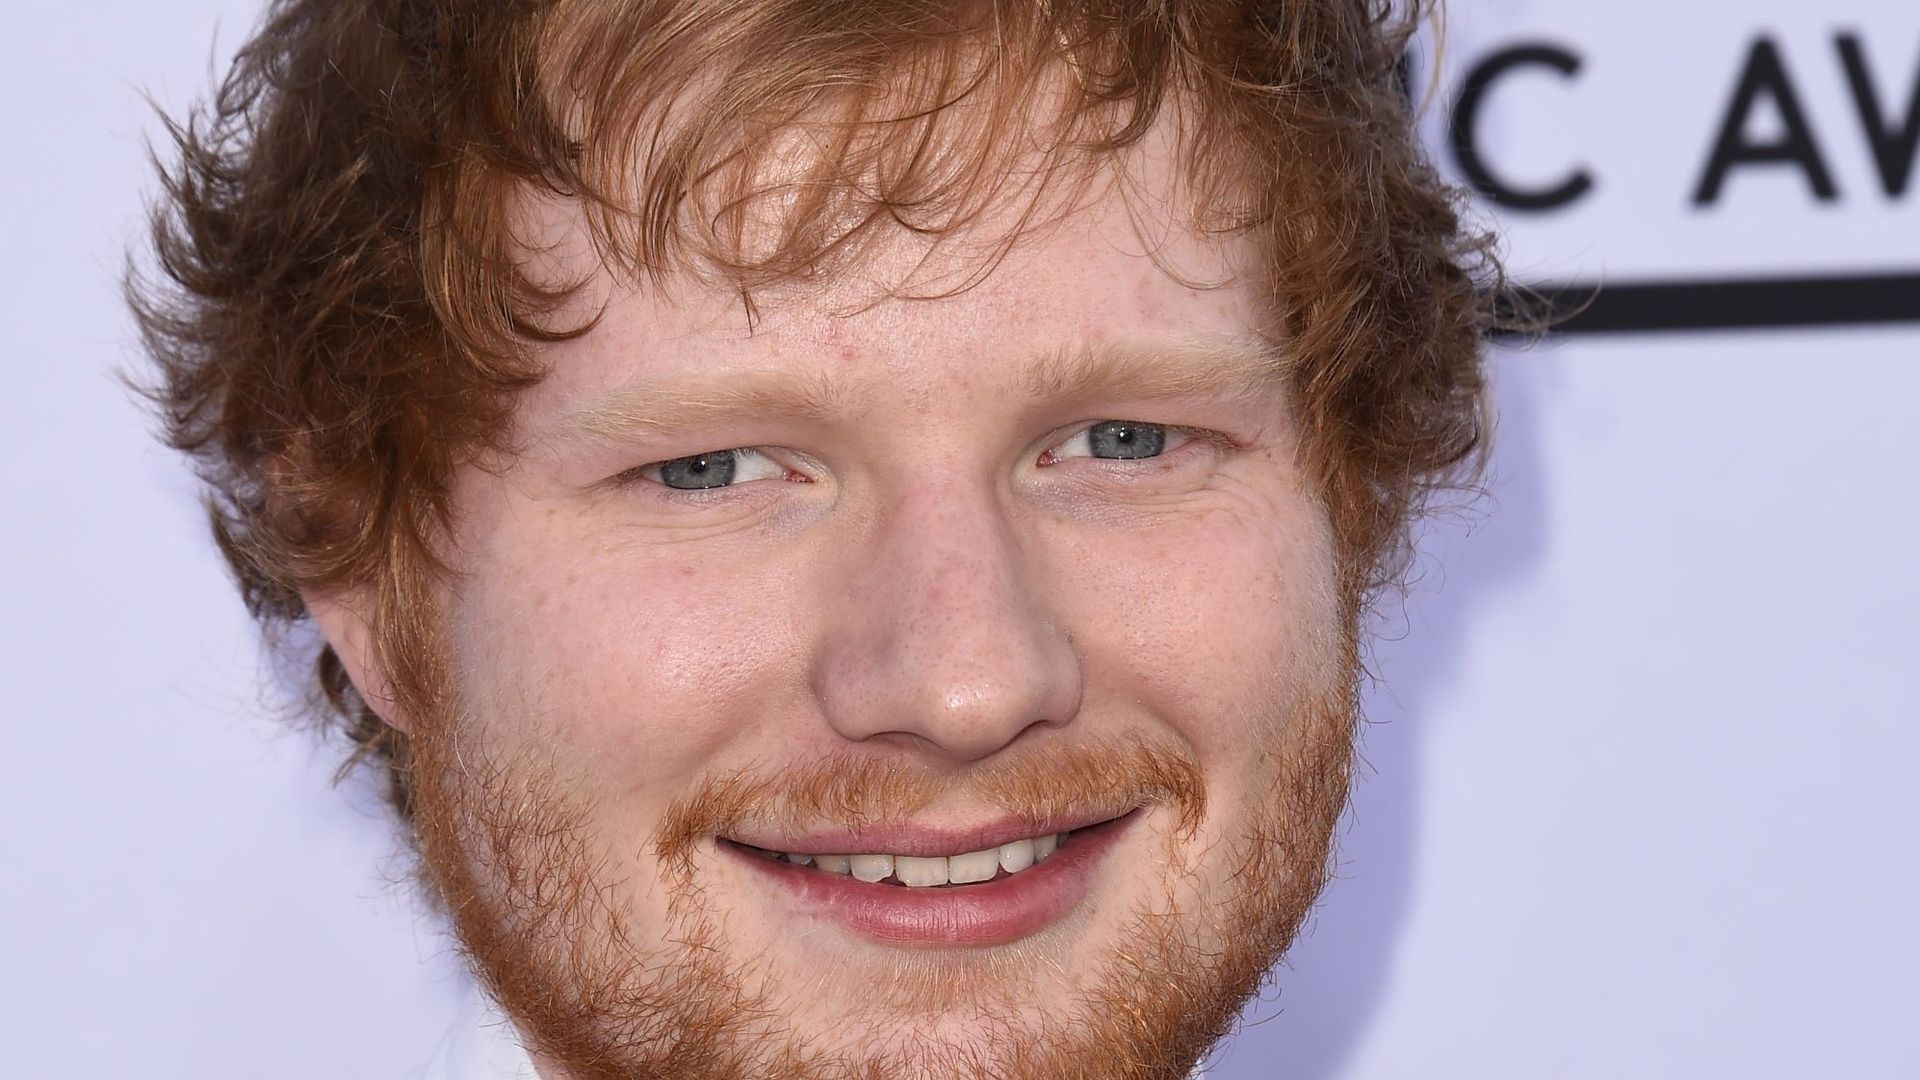 Ed Sheeran dans la prochaine saison de "Game of Thrones"